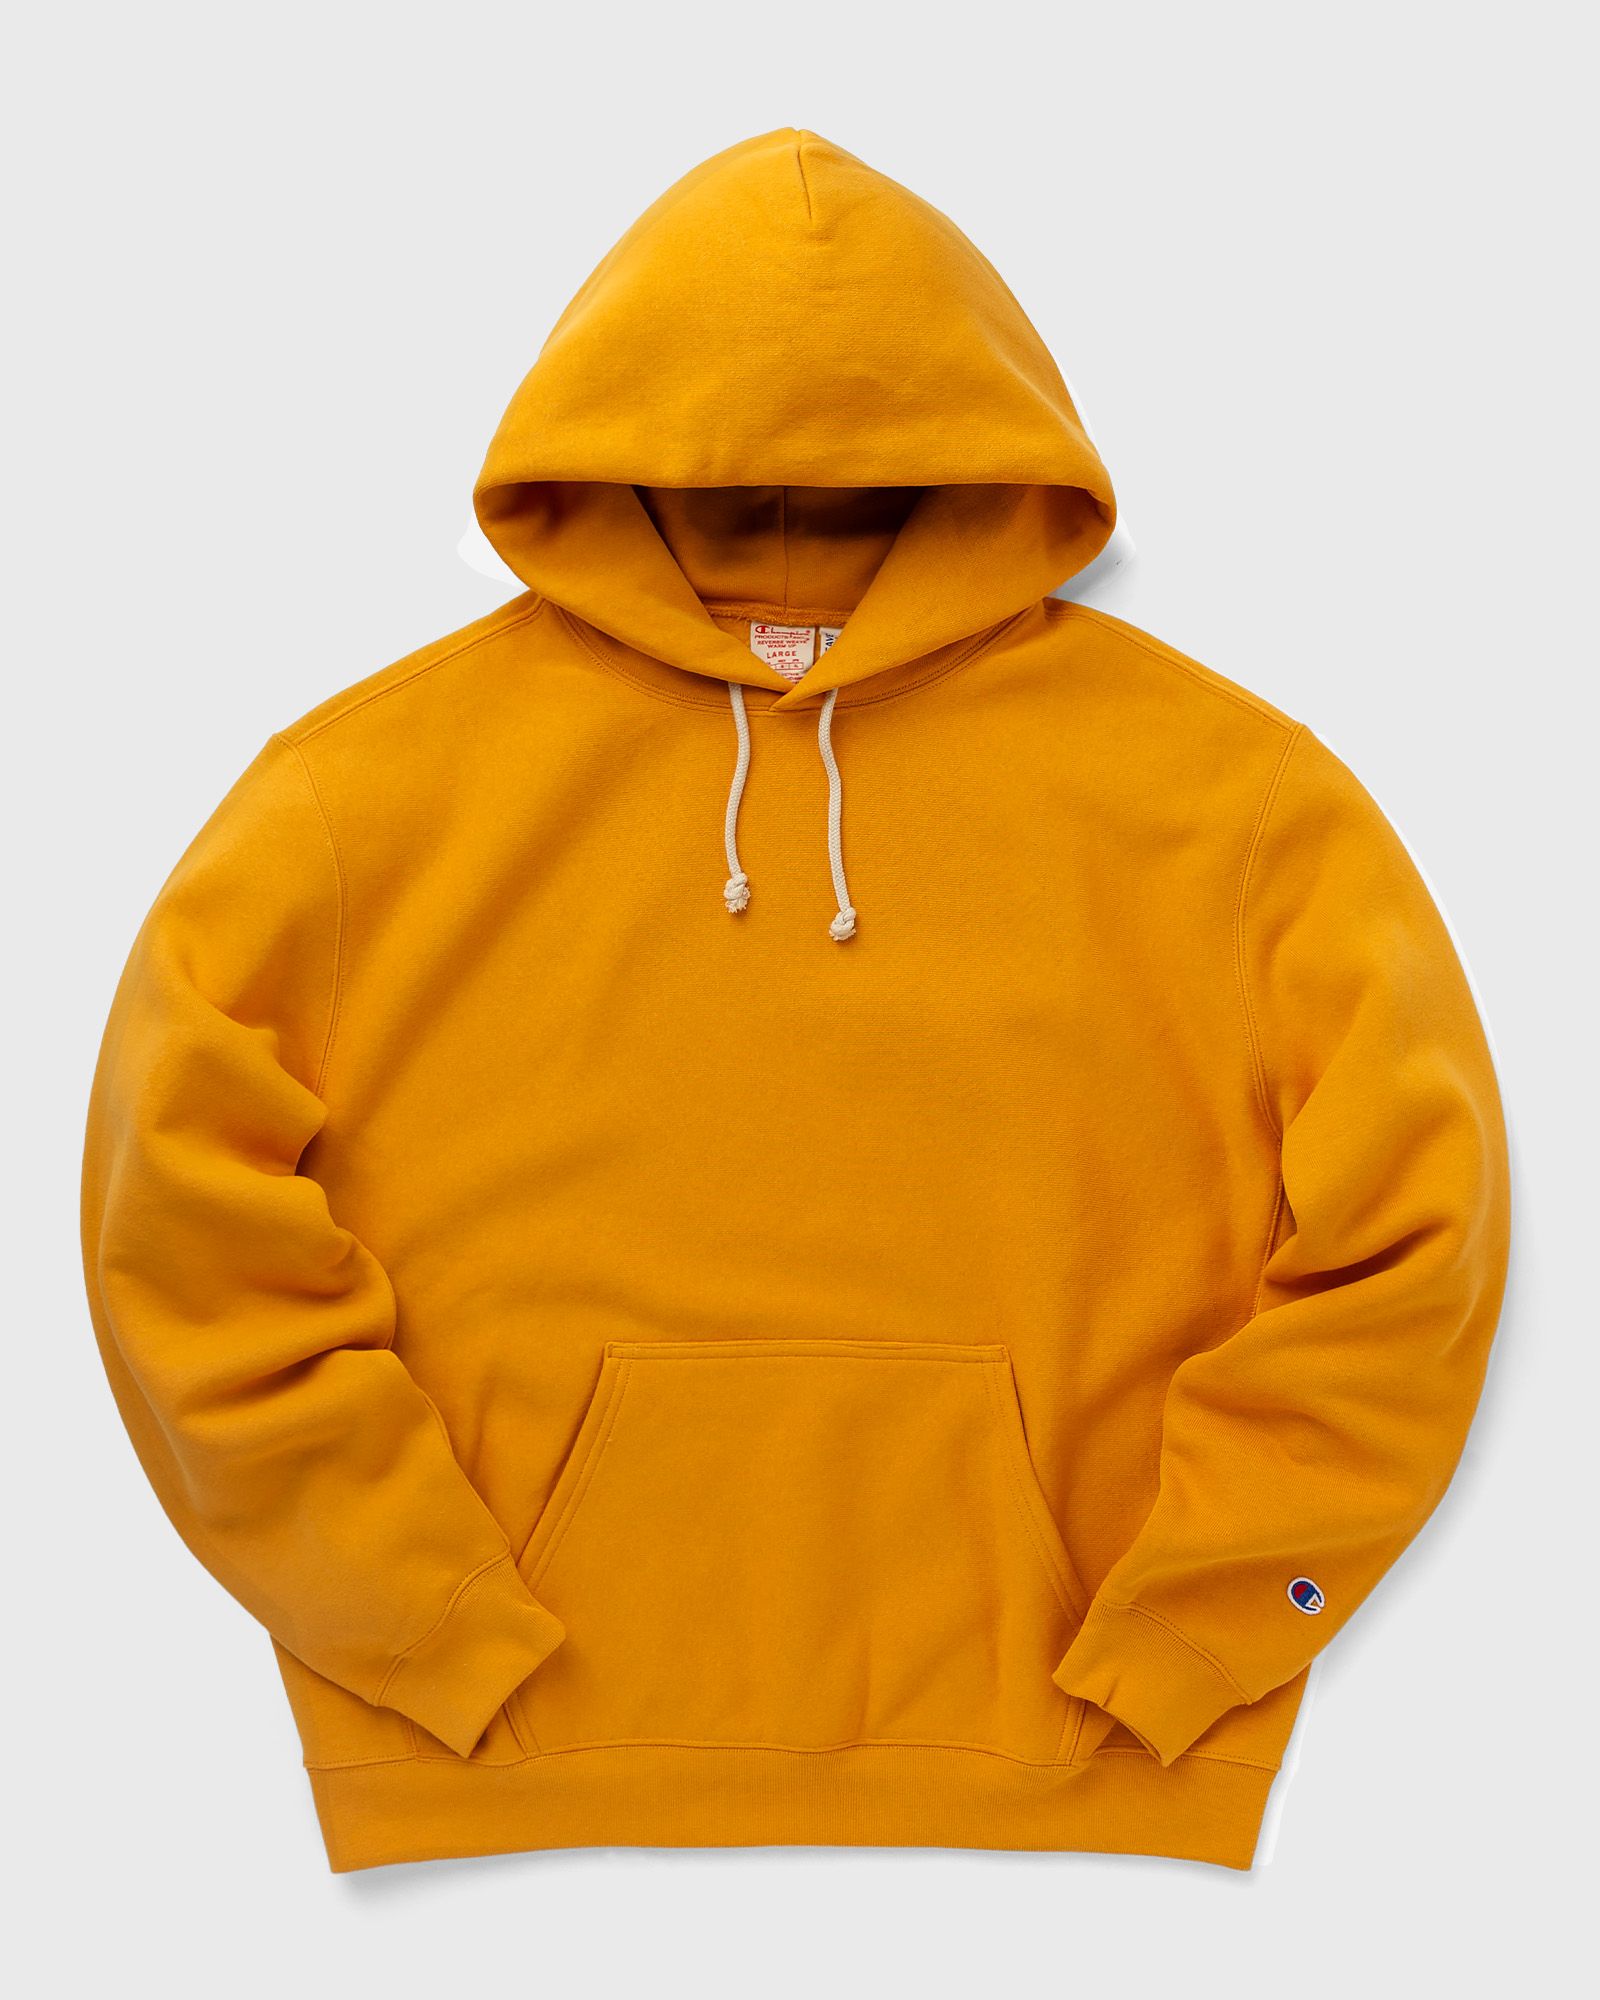 CHAMPION - hooded sweatshirt men hoodies yellow in größe:l